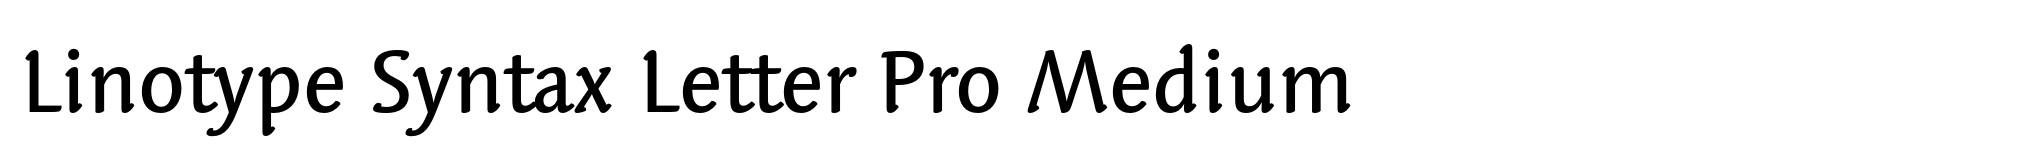 Linotype Syntax Letter Pro Medium image